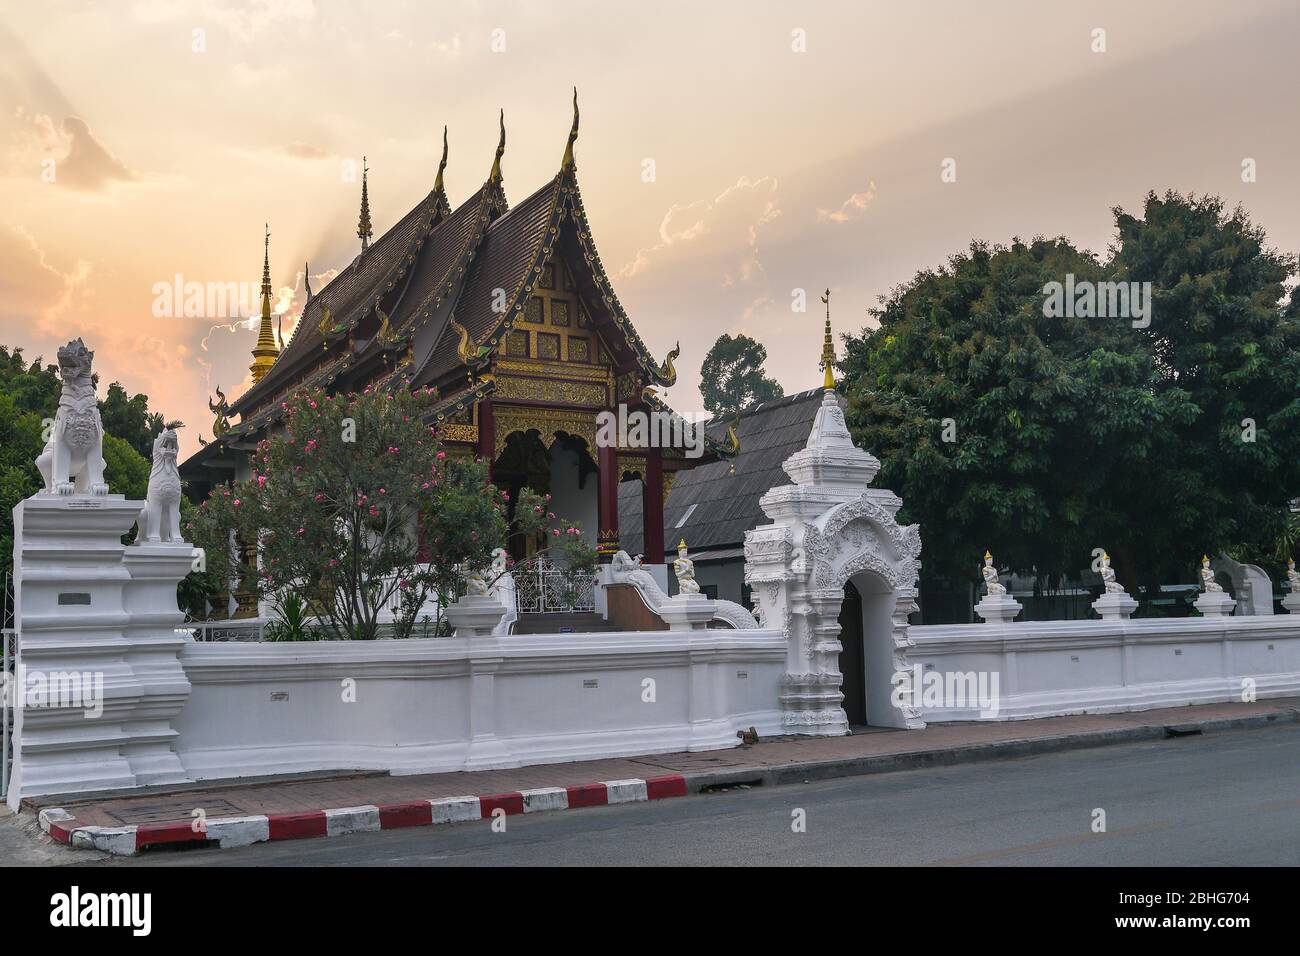 Tempio buddista cappella in serata tramonto luce. Taem Wat Chang. Chiang mai, Thailandia. Foto Stock